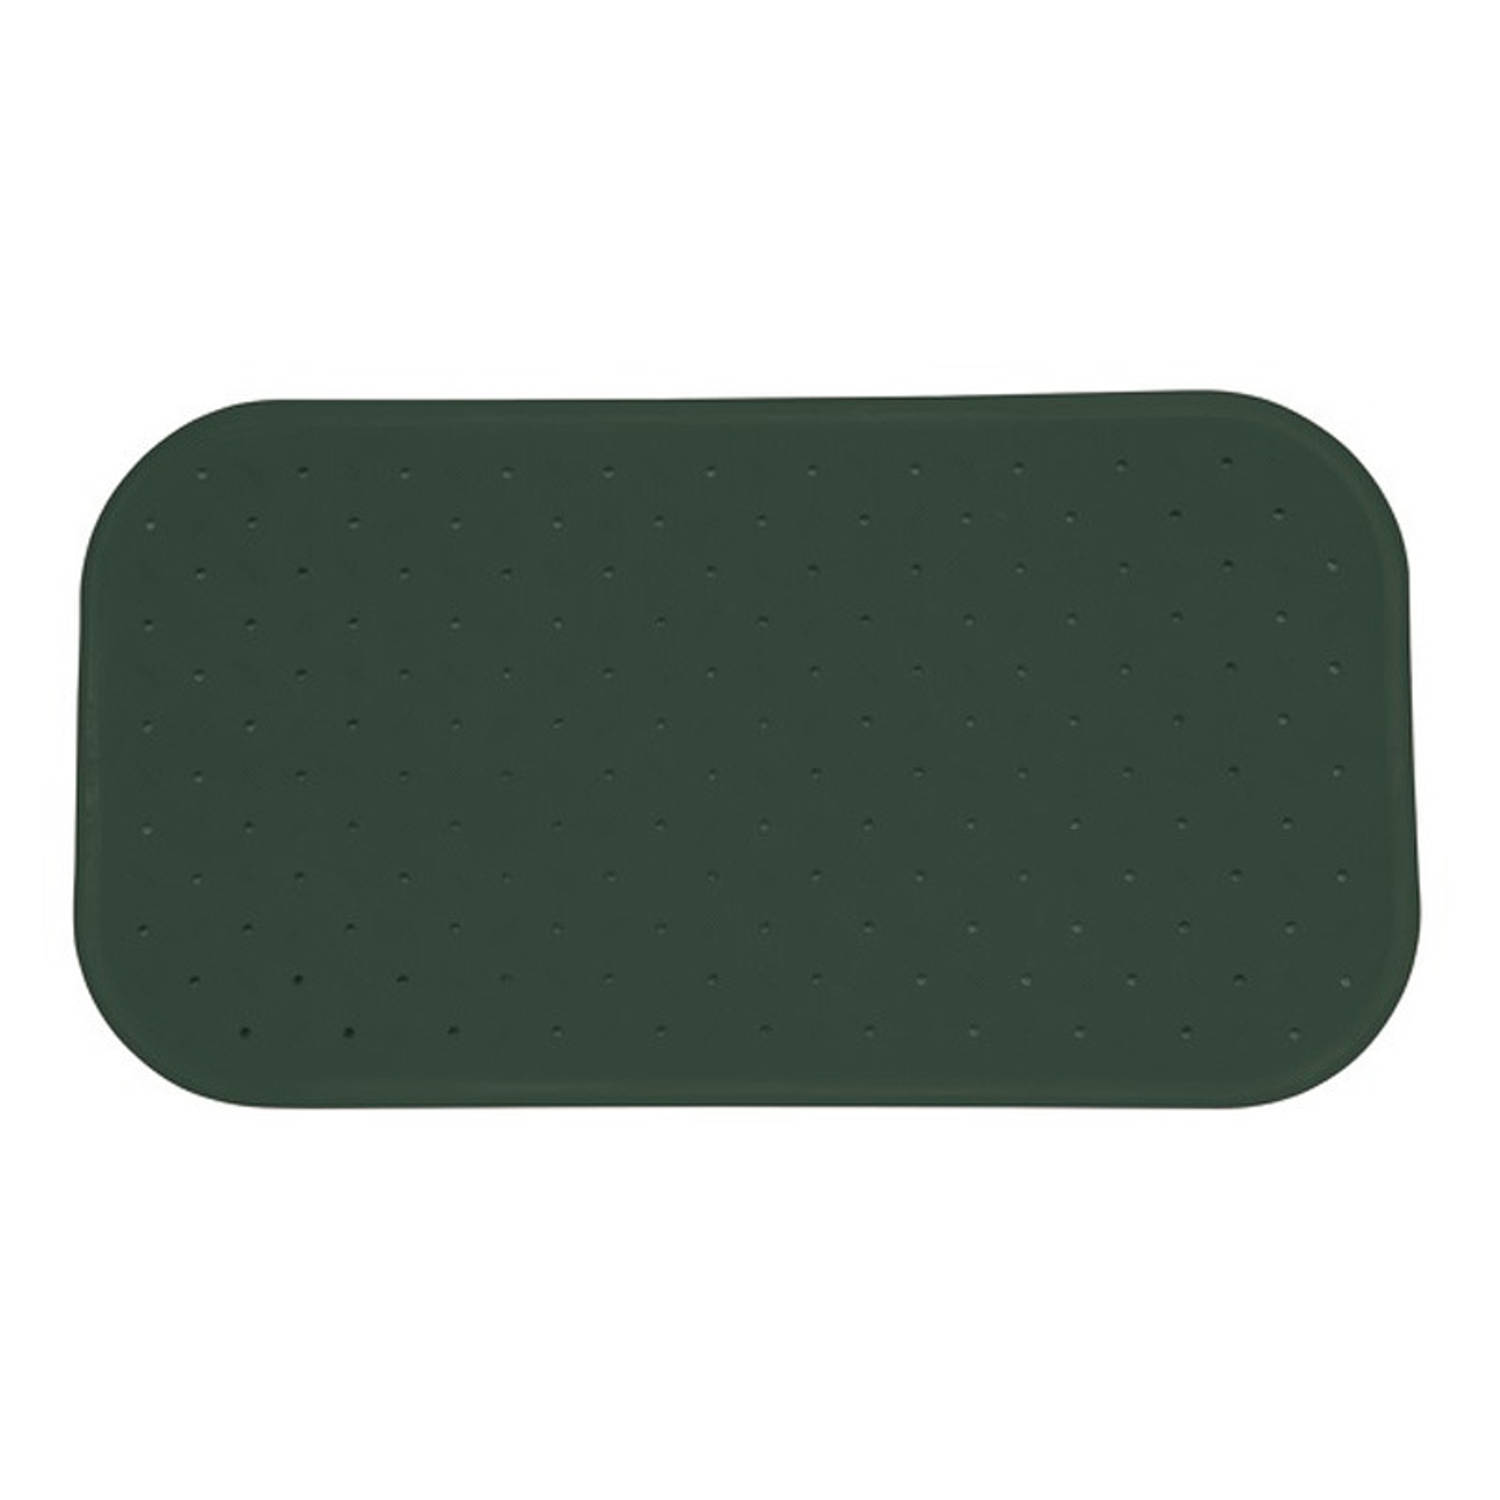 MSV Douche-bad anti-slip mat badkamer rubber groen 36 x 65 cm Badmatjes